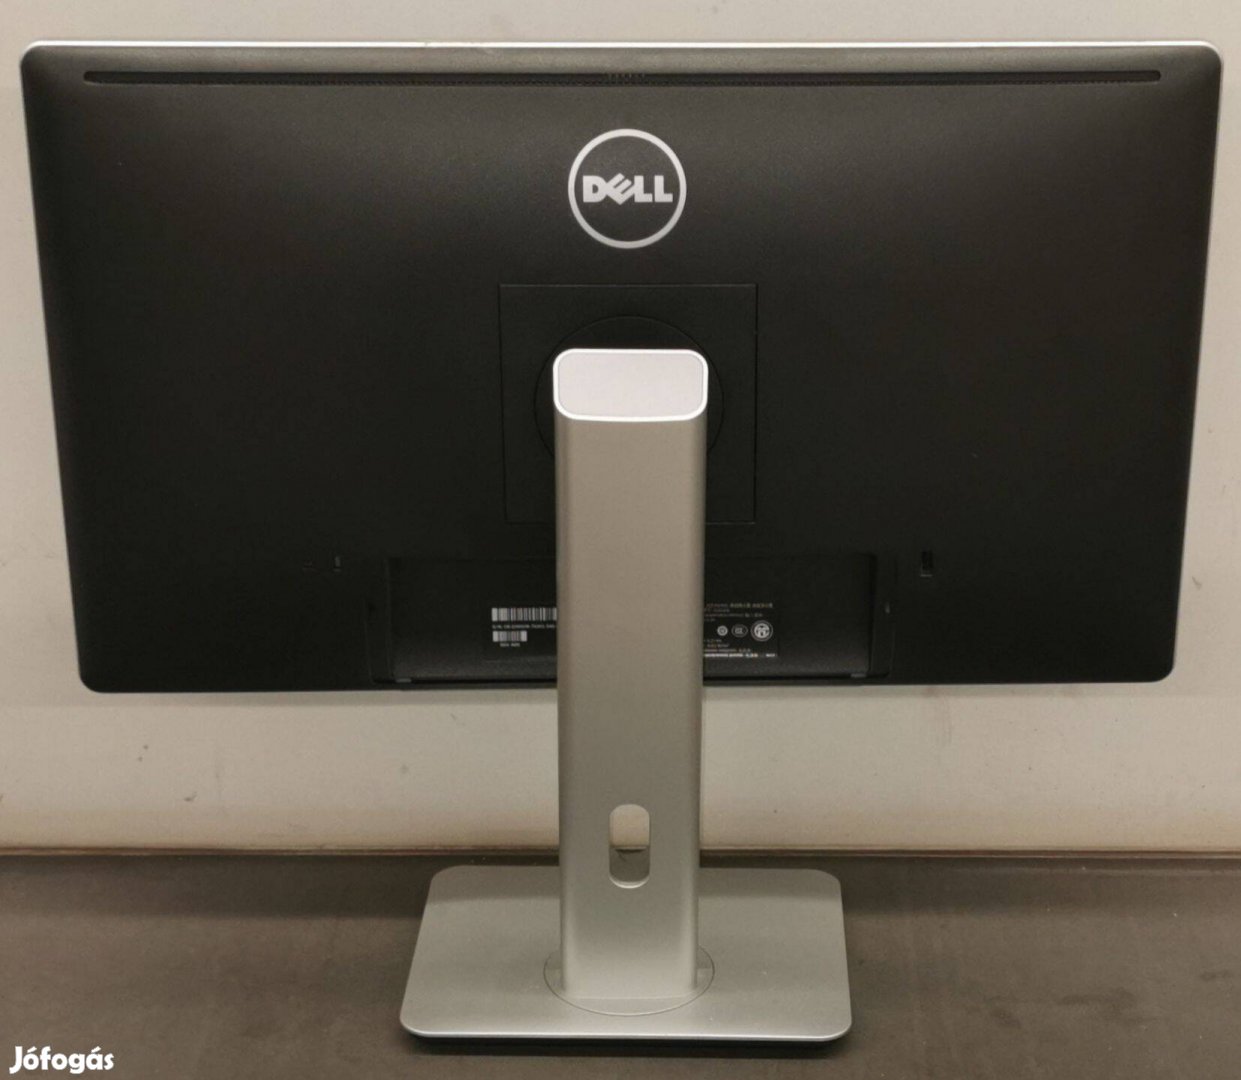 Dell 2414hb profi,90fokban forgatható kijelzős Full HD led monitor